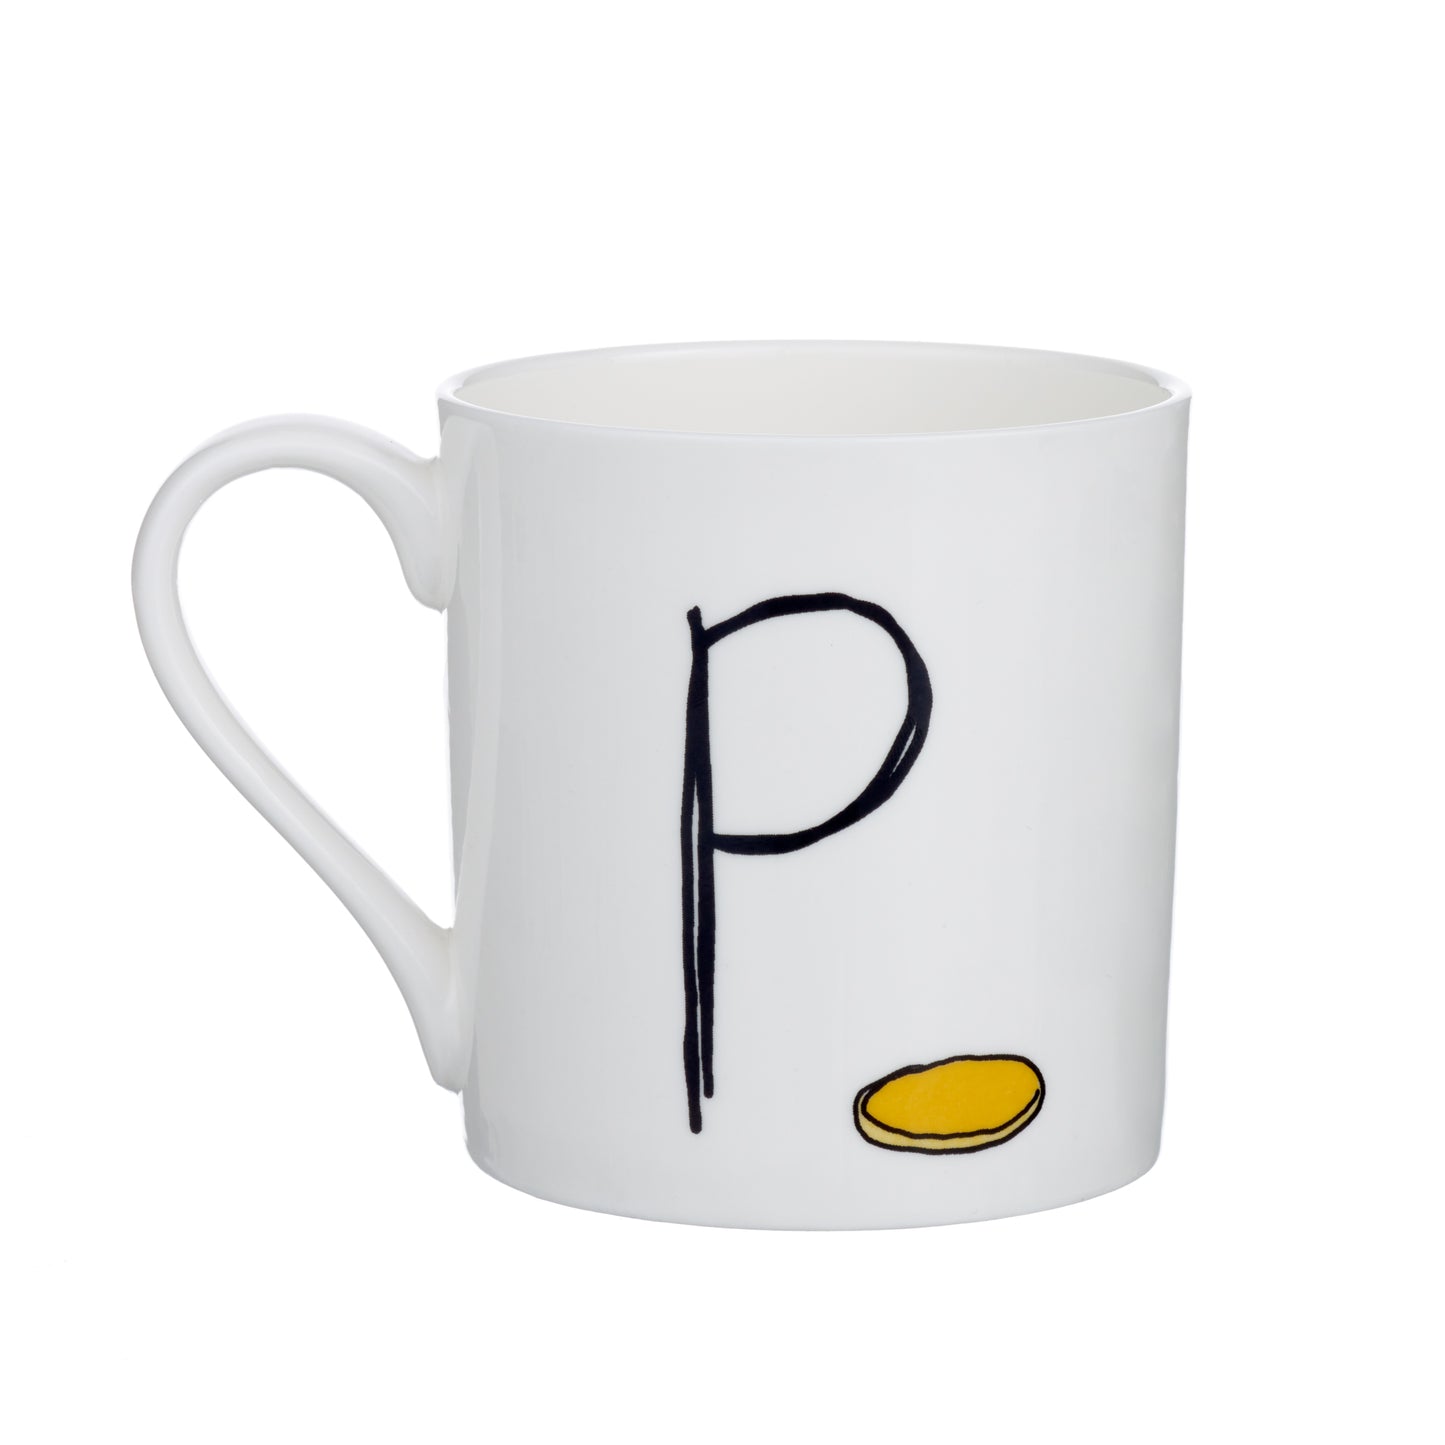 P - Alphabet of Snacking Animals Mug